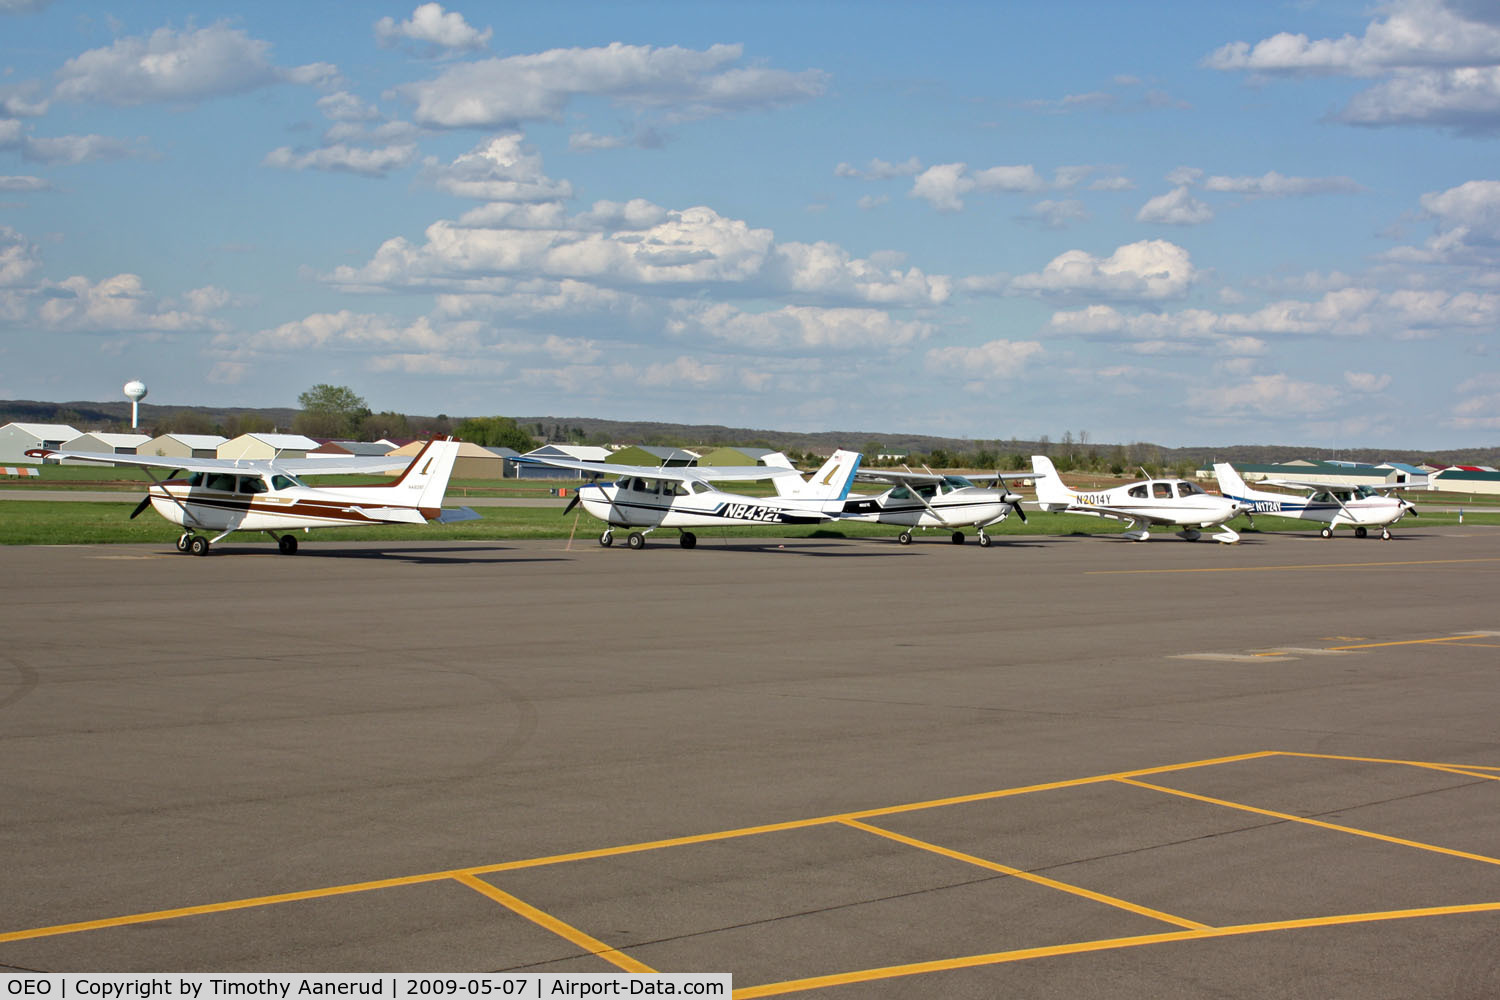 L O Simenstad Municipal Airport (OEO) - Visitors for an FAA Safety Seminar